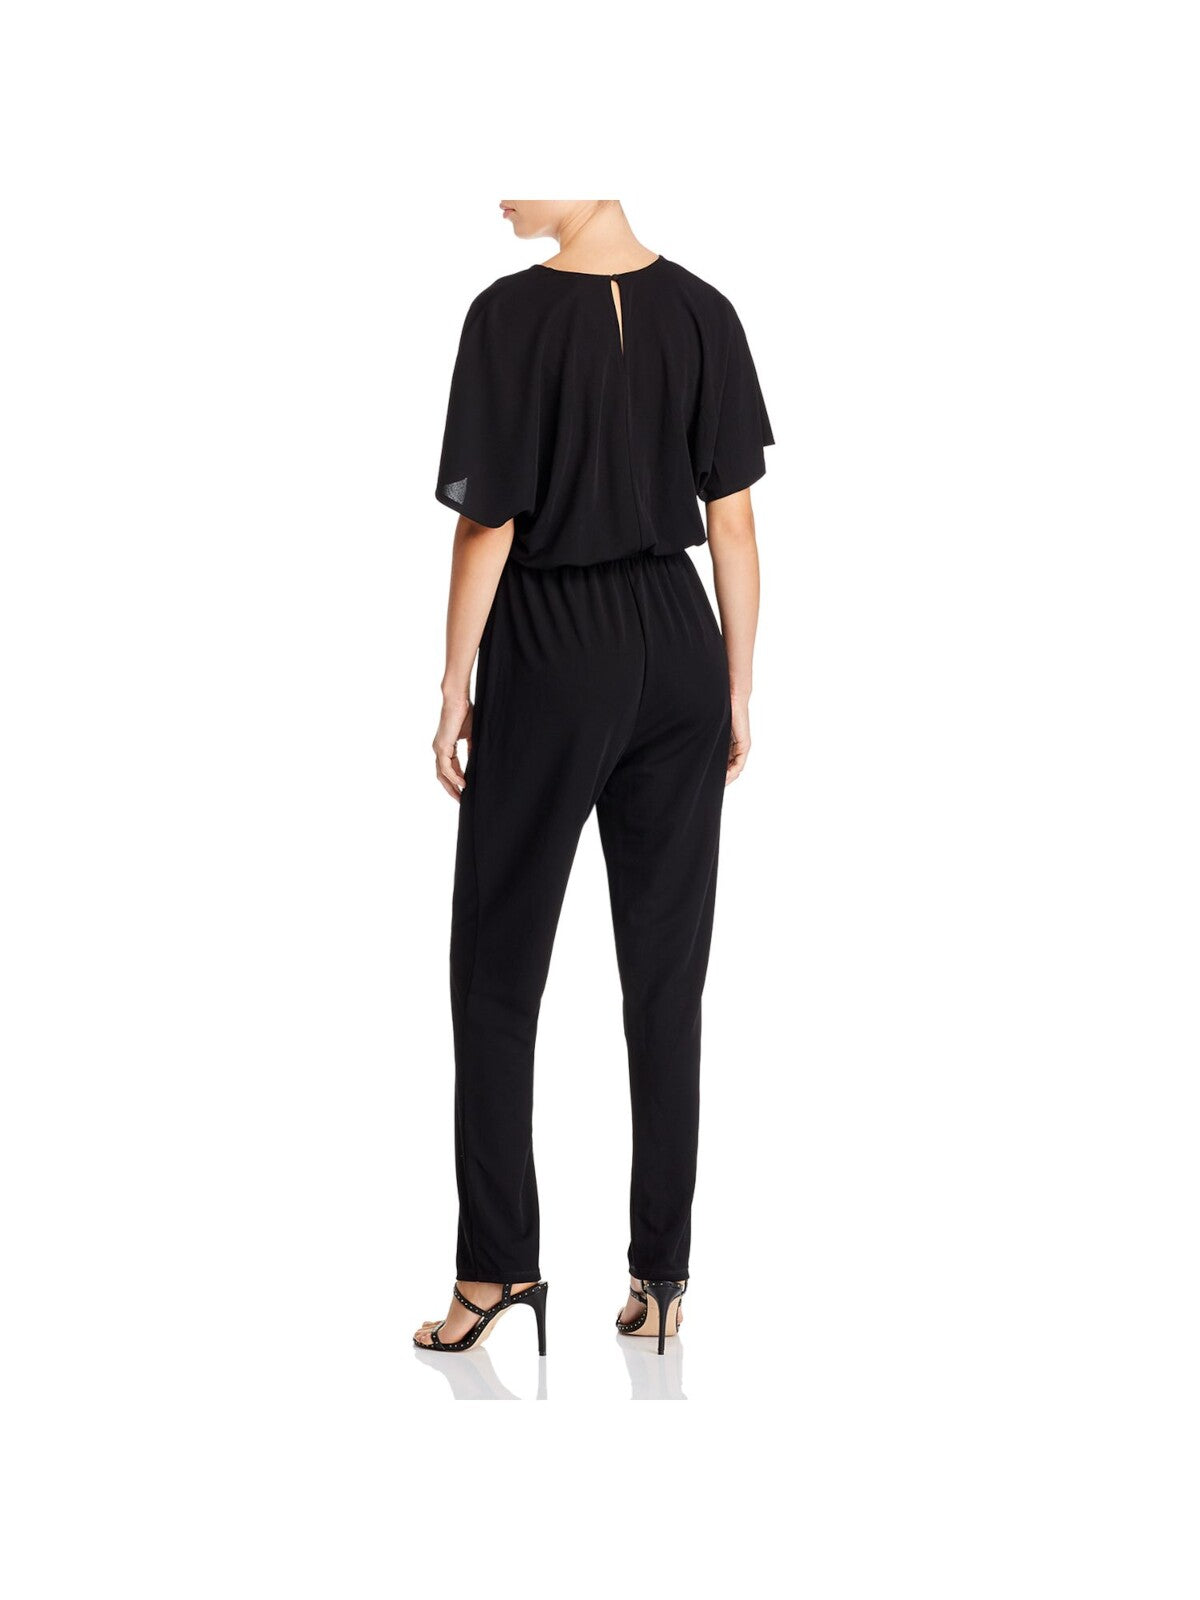 LEOTA Womens Black Stretch Animal Print Short Sleeve V Neck Evening Straight leg Jumpsuit S